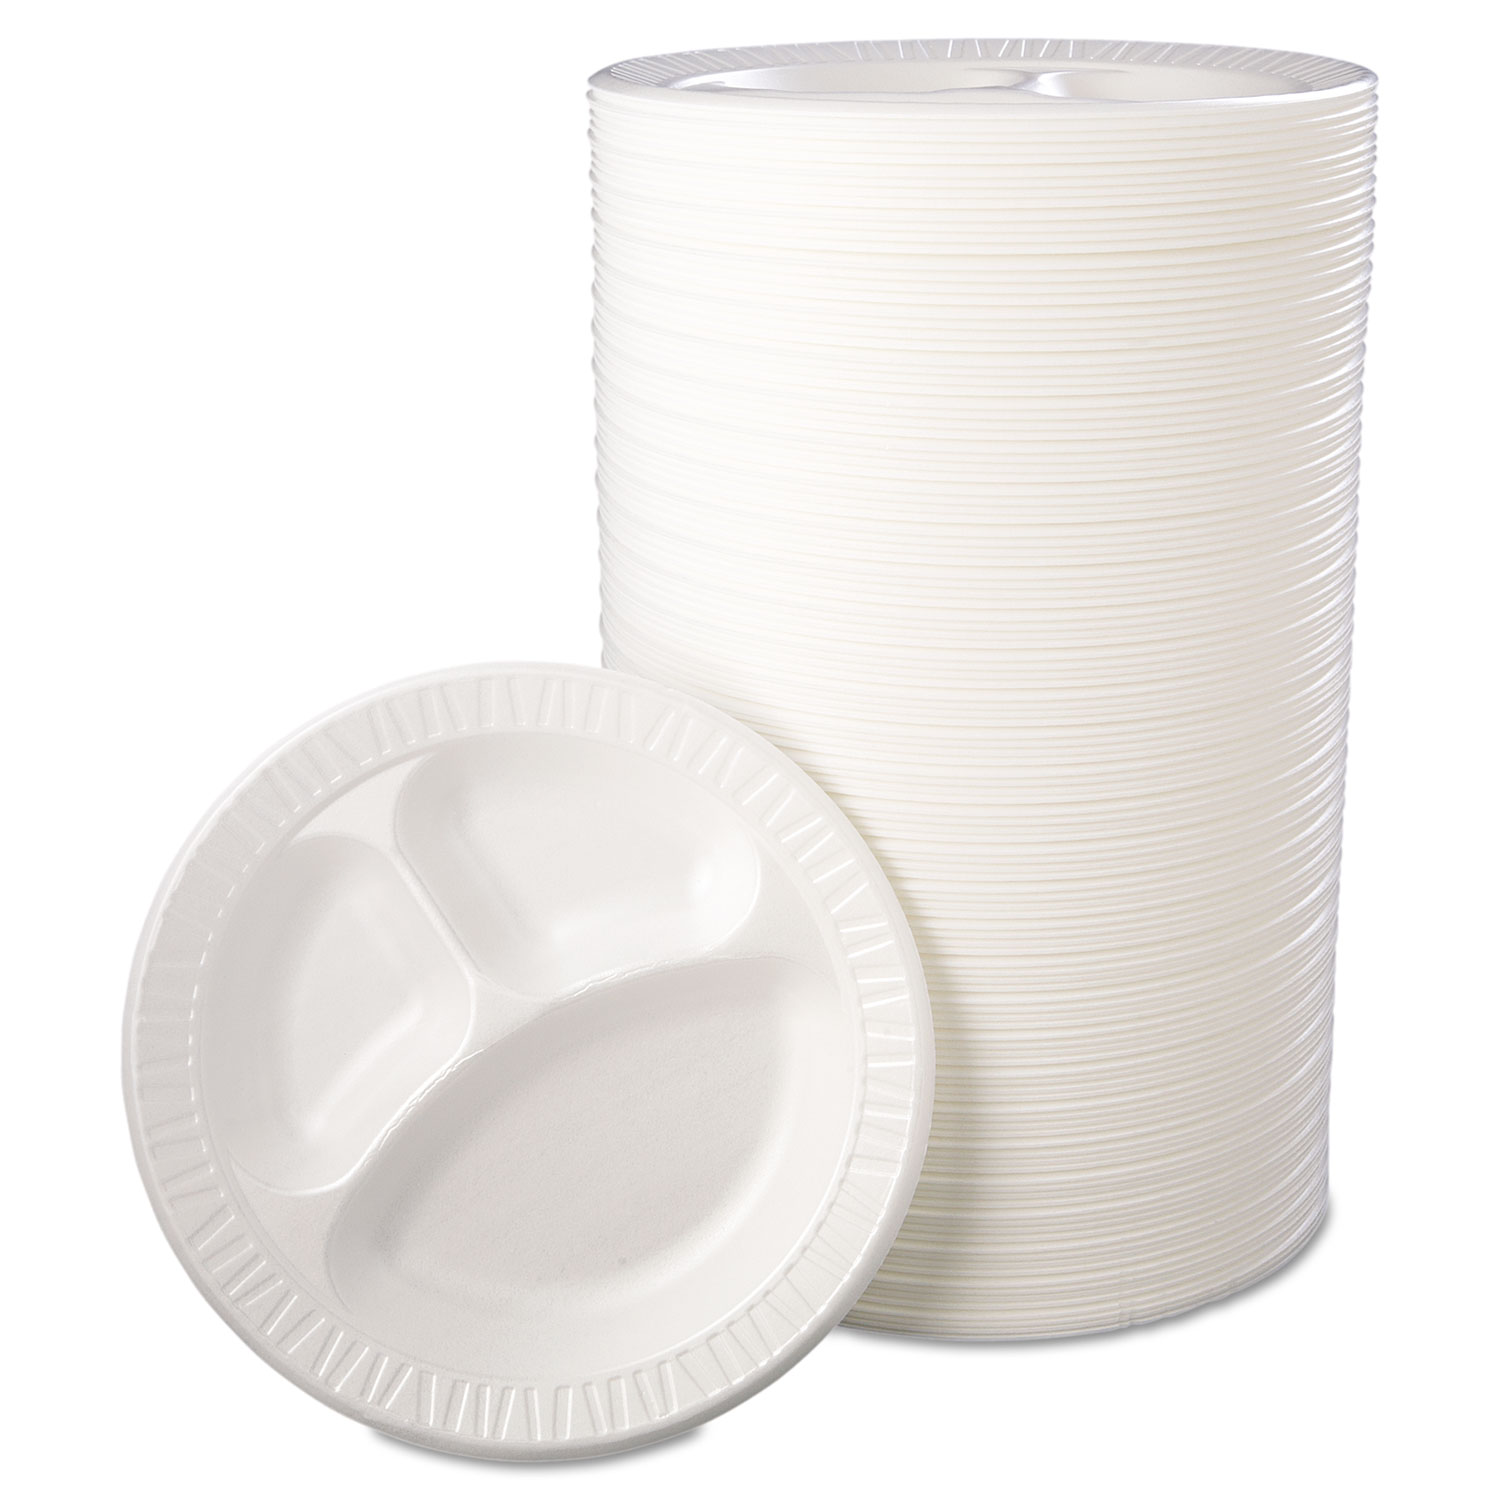 Darnel Round Foam Plate - 10 1/4 x 1, White